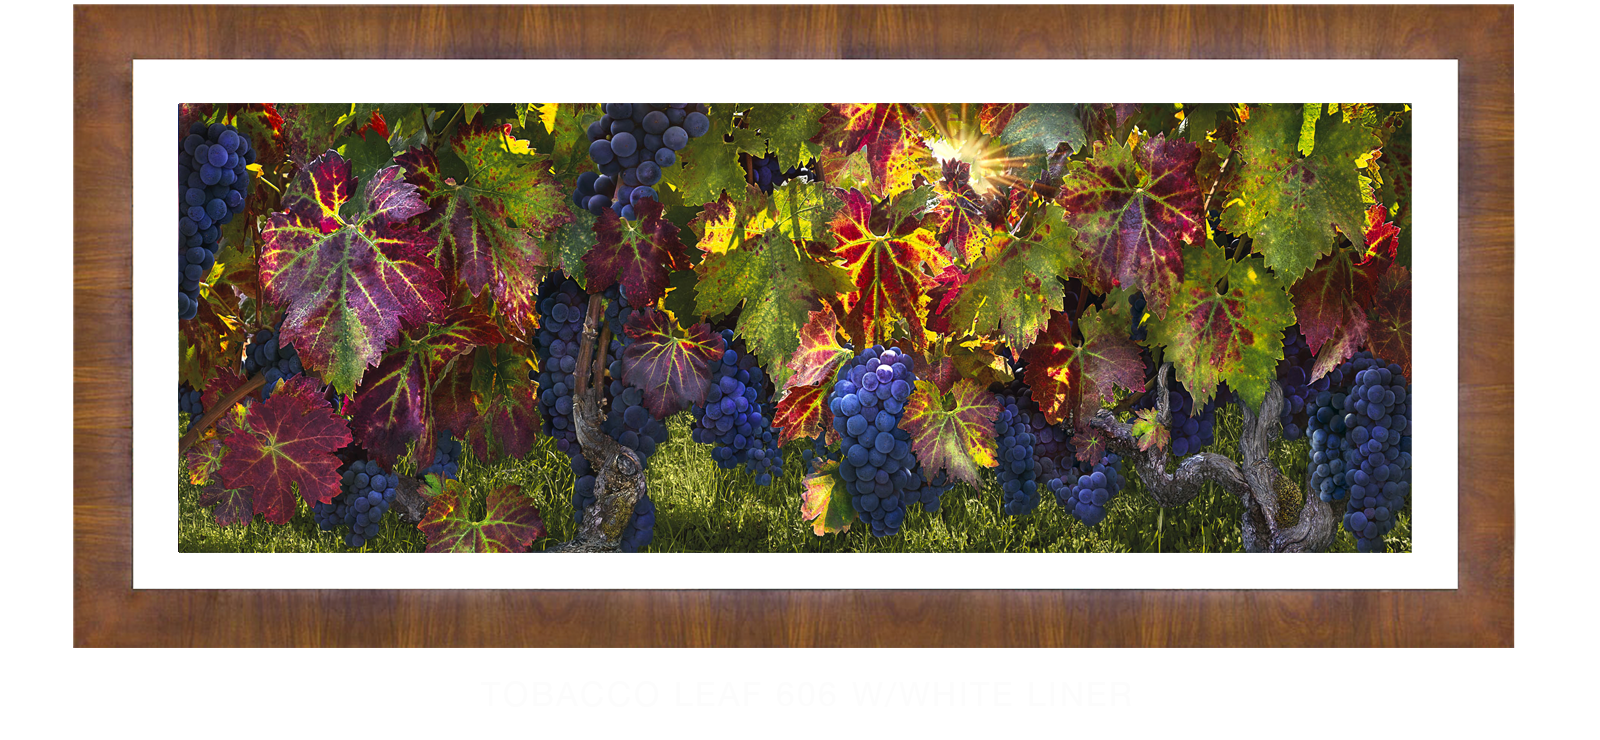 24CATHEDRALI VITIS Tobacco Leaf 606 w_Wht Liner T